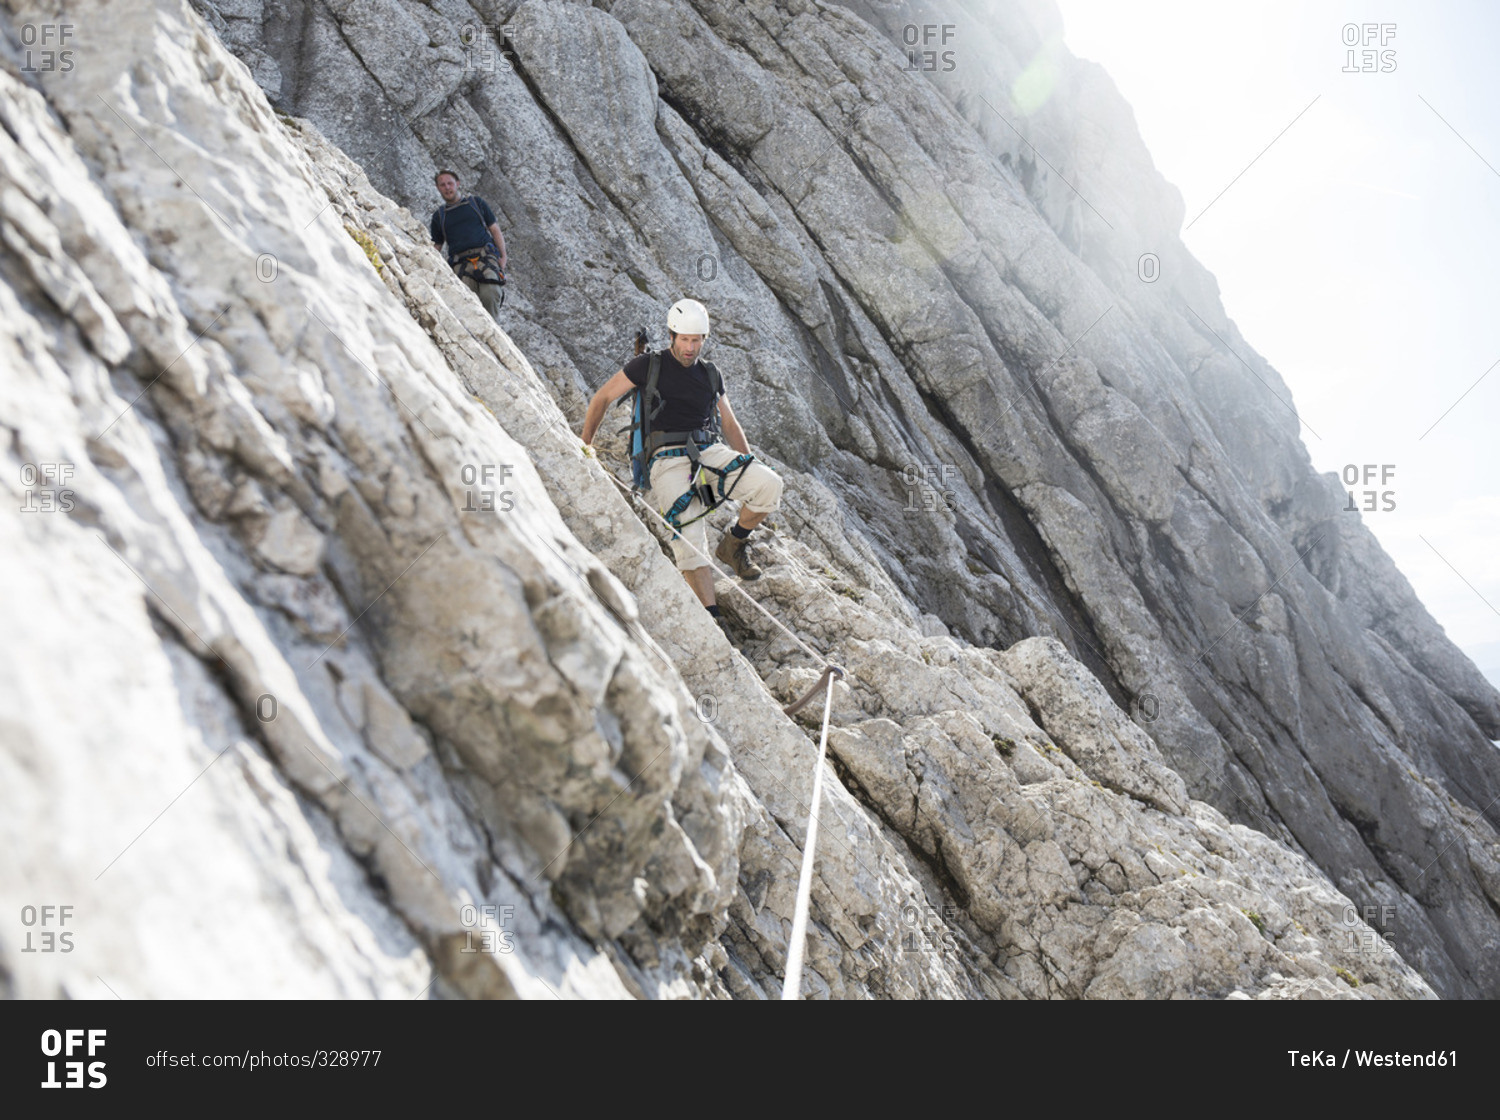 Two men climbing down a via ferrata